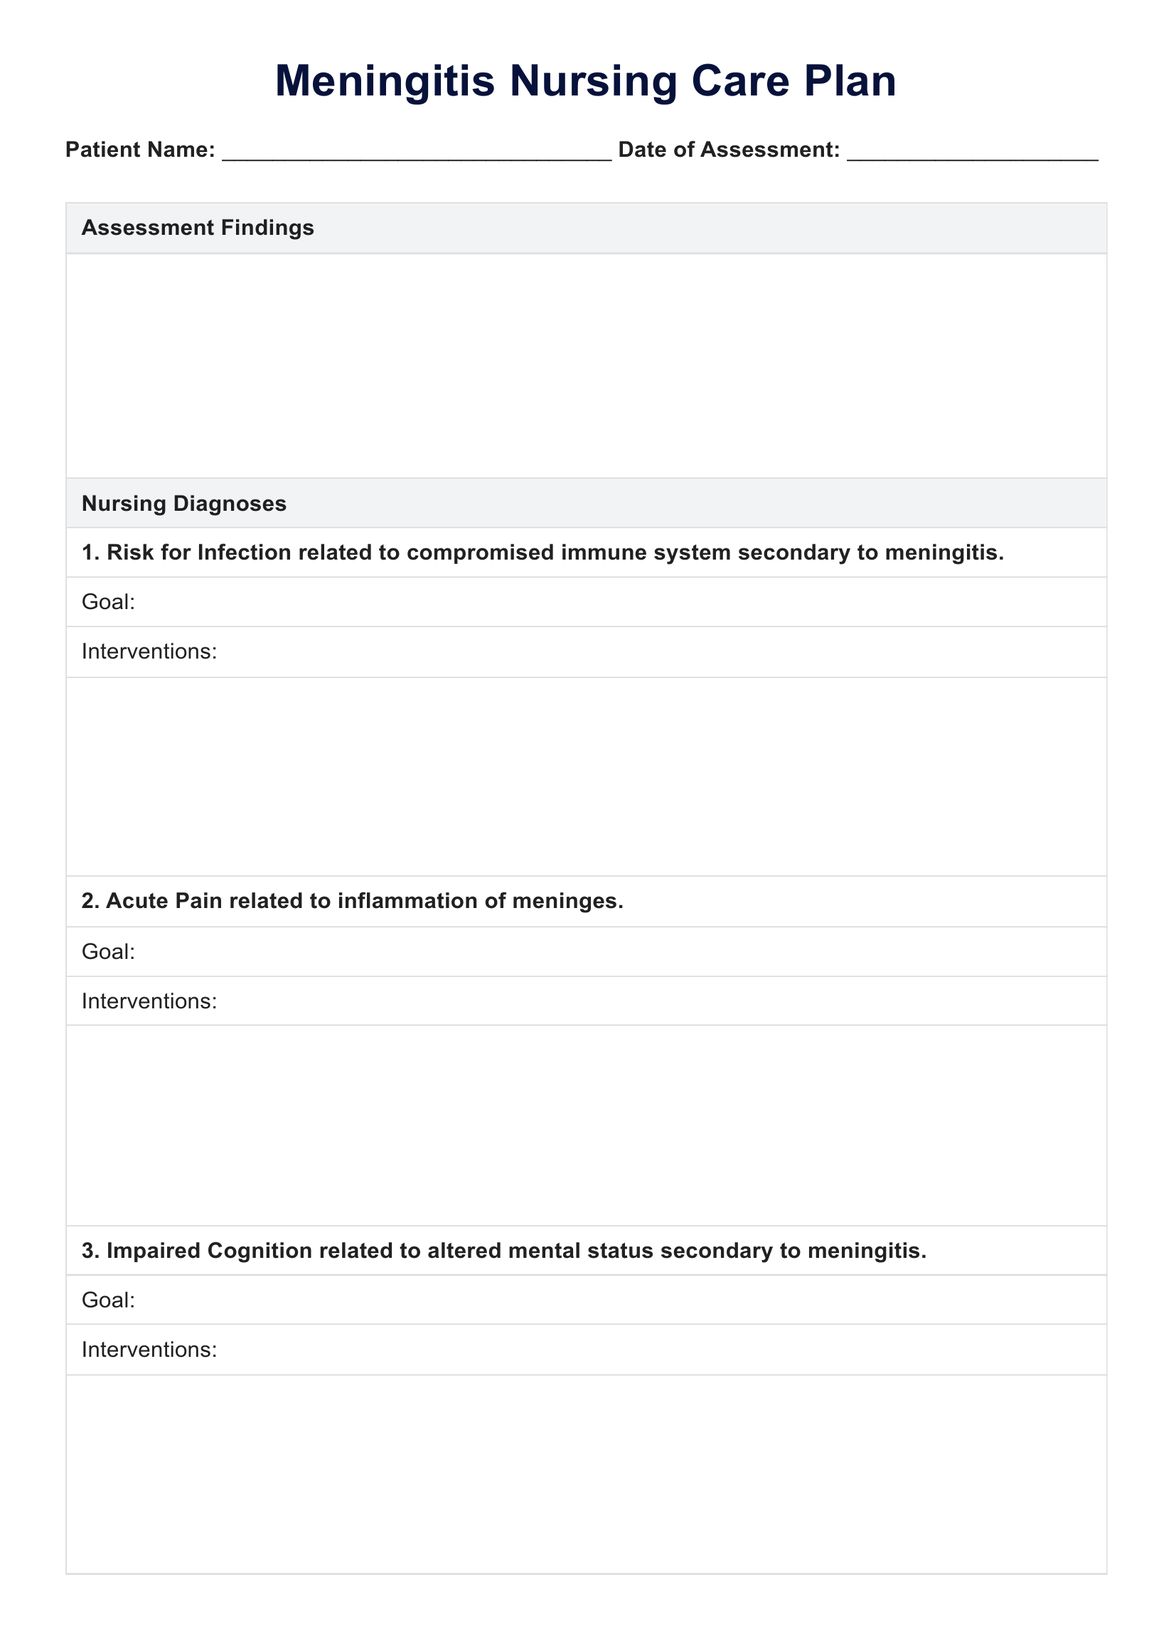 Meningitis Nursing Care Plan PDF Example